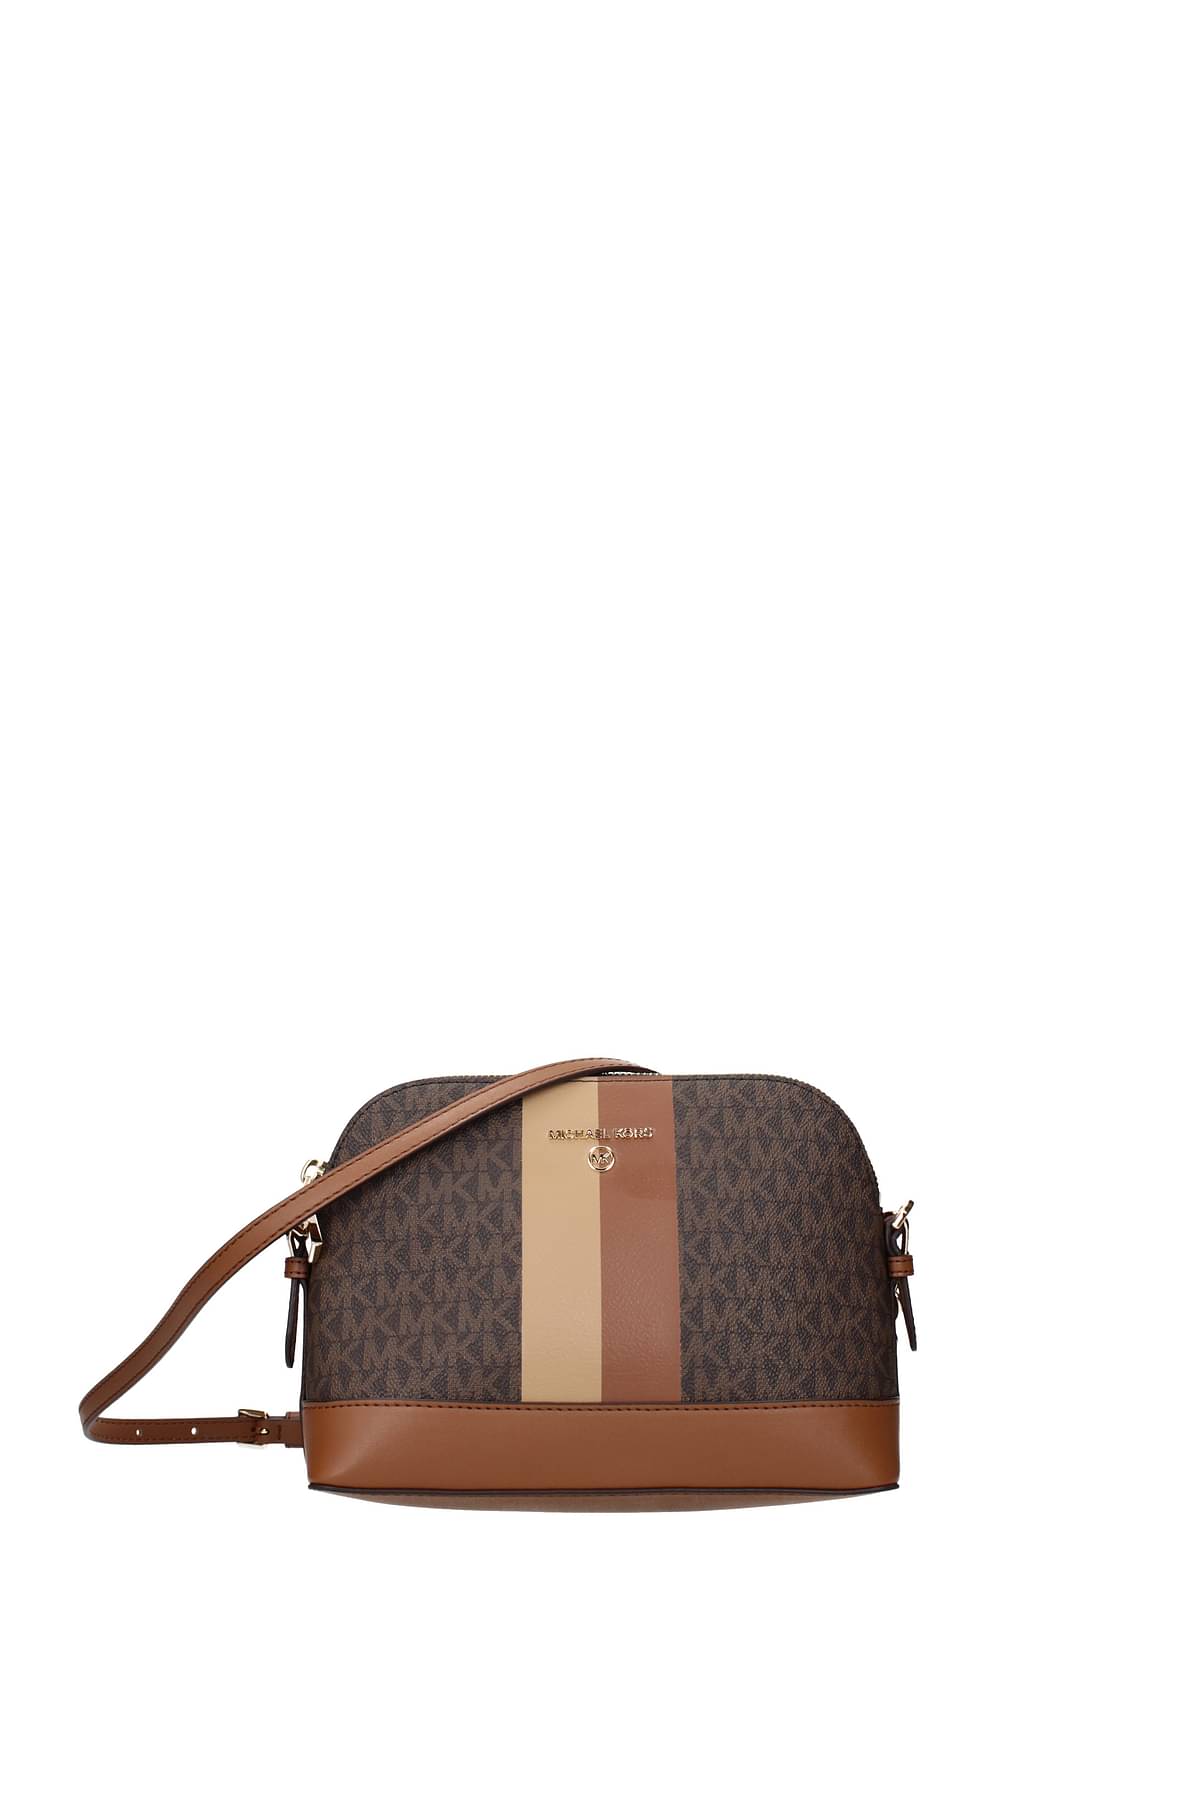 Women's Handbag Michael Kors 32S2GGRC5Y-LUGGAGE Brown (20 x 27 x 7 cm)